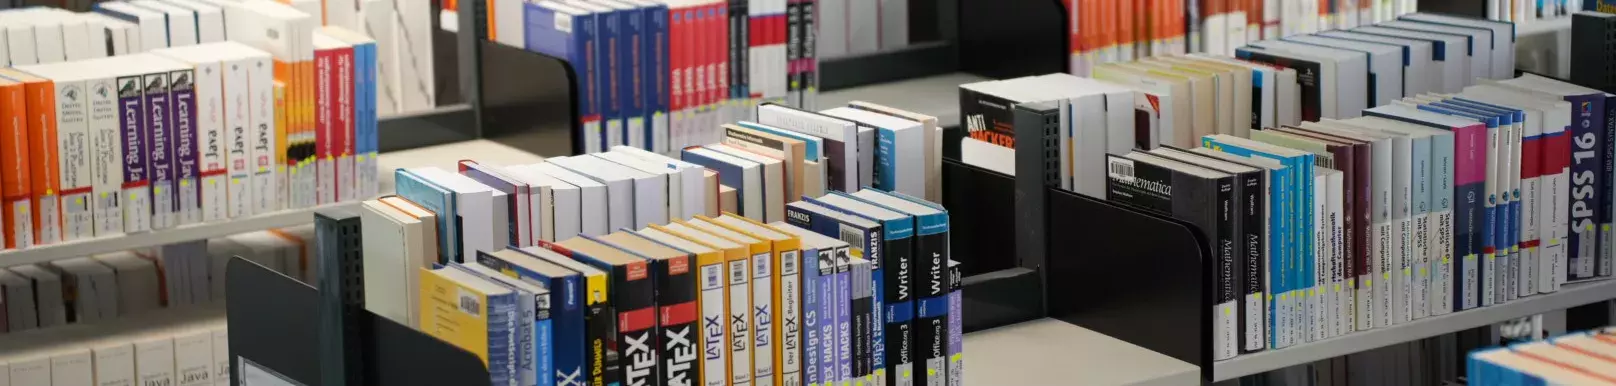 Bookshelves in a university library